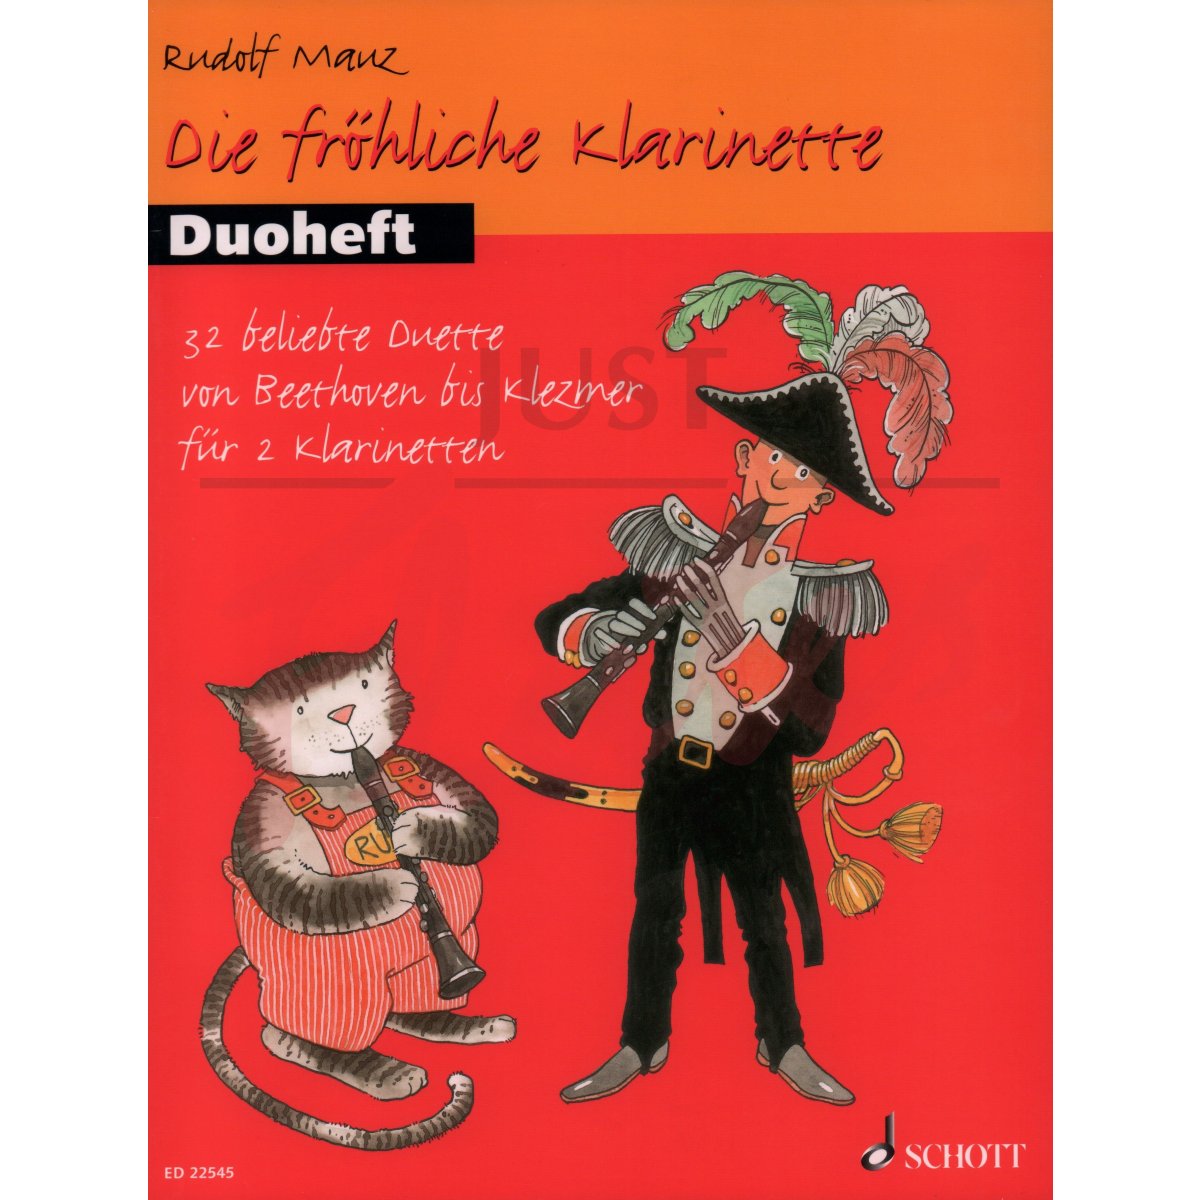 The Happy Clarinet (Die fröhliche Klarinette) for Two Clarinets